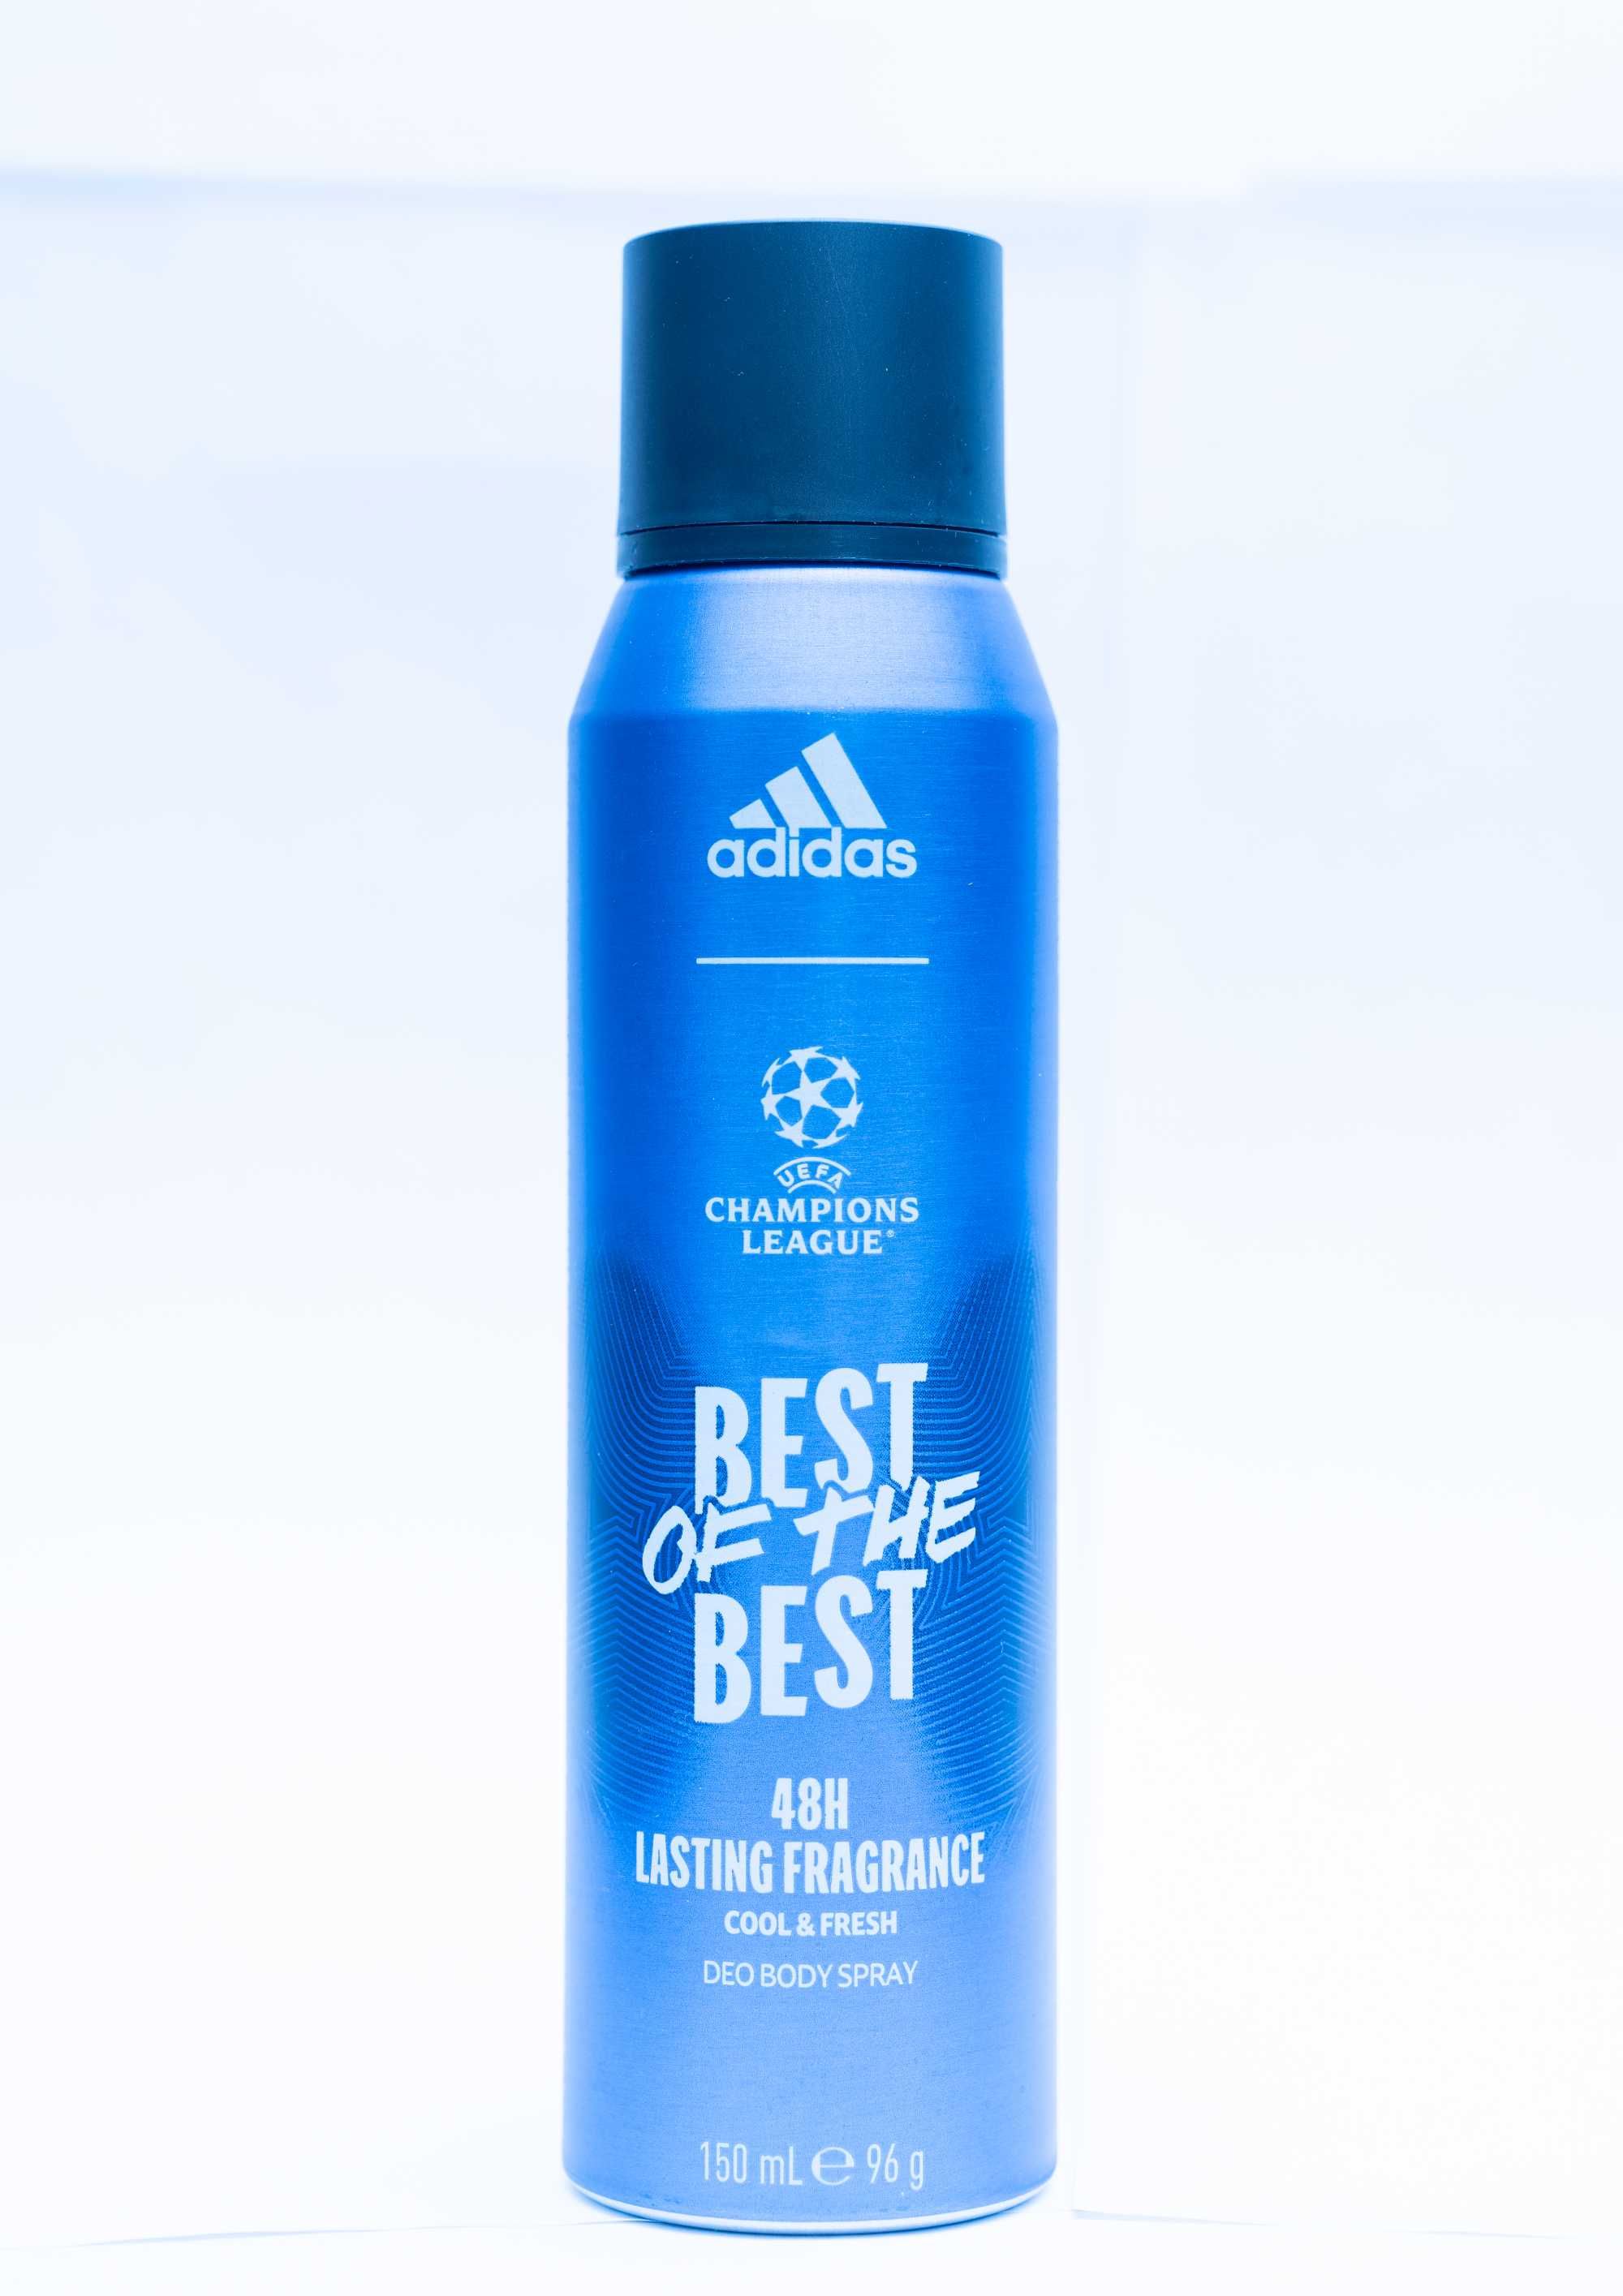 Dezodorant Adidas Champions League Best of the Best 150 ml